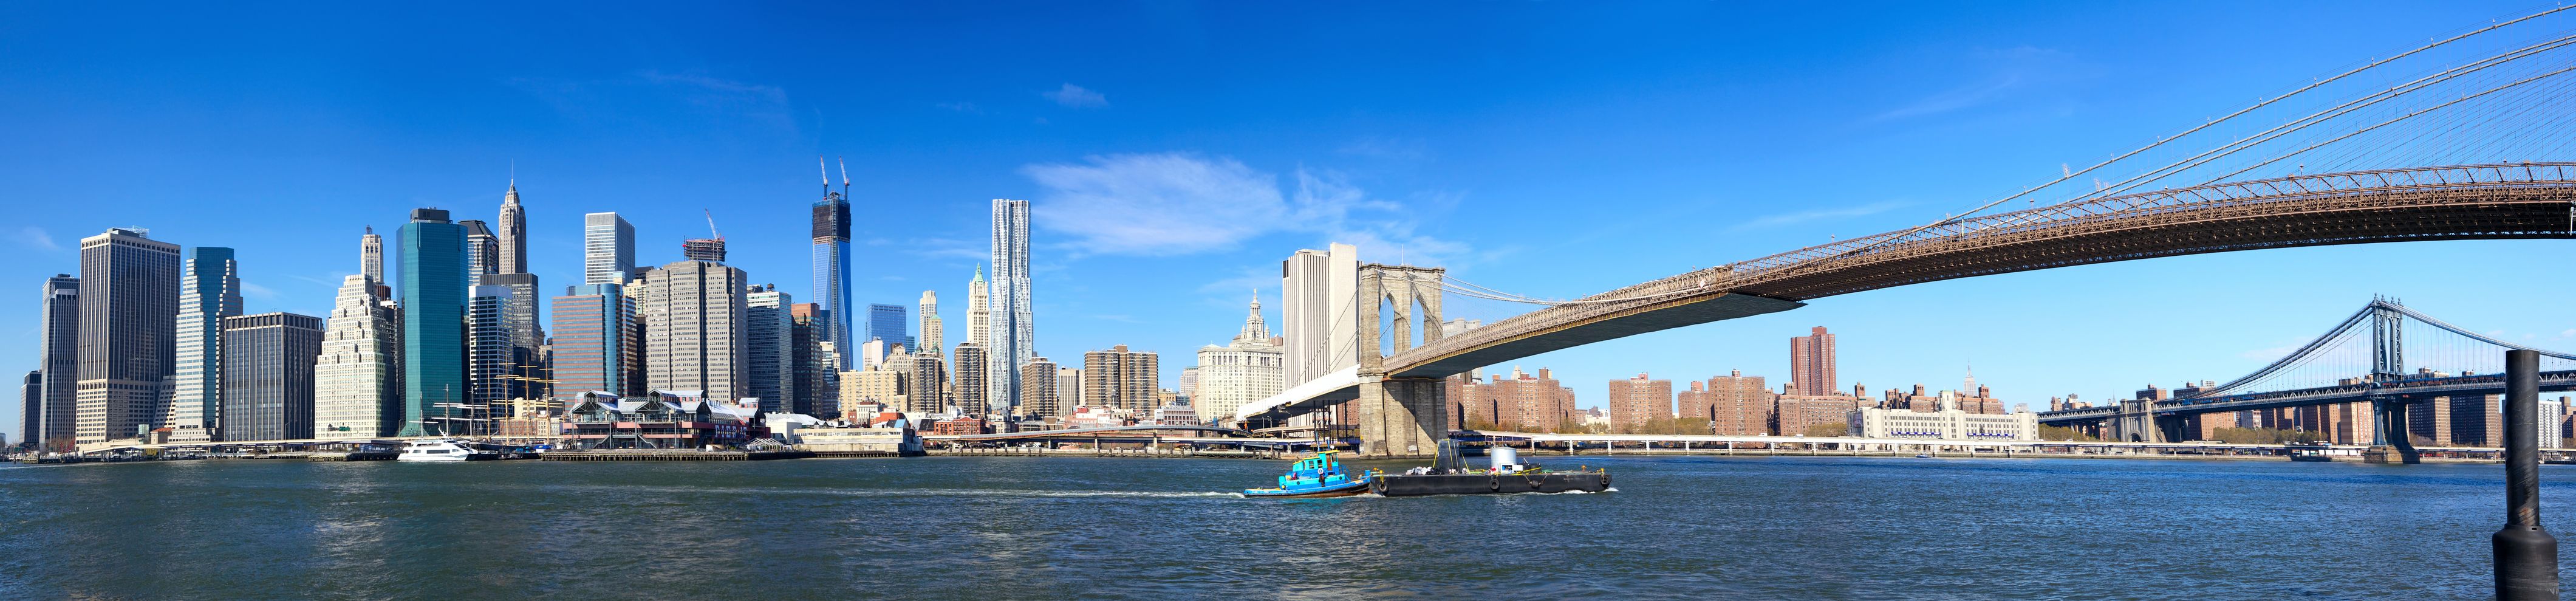 New York City Cruise Ship Injury Attorney